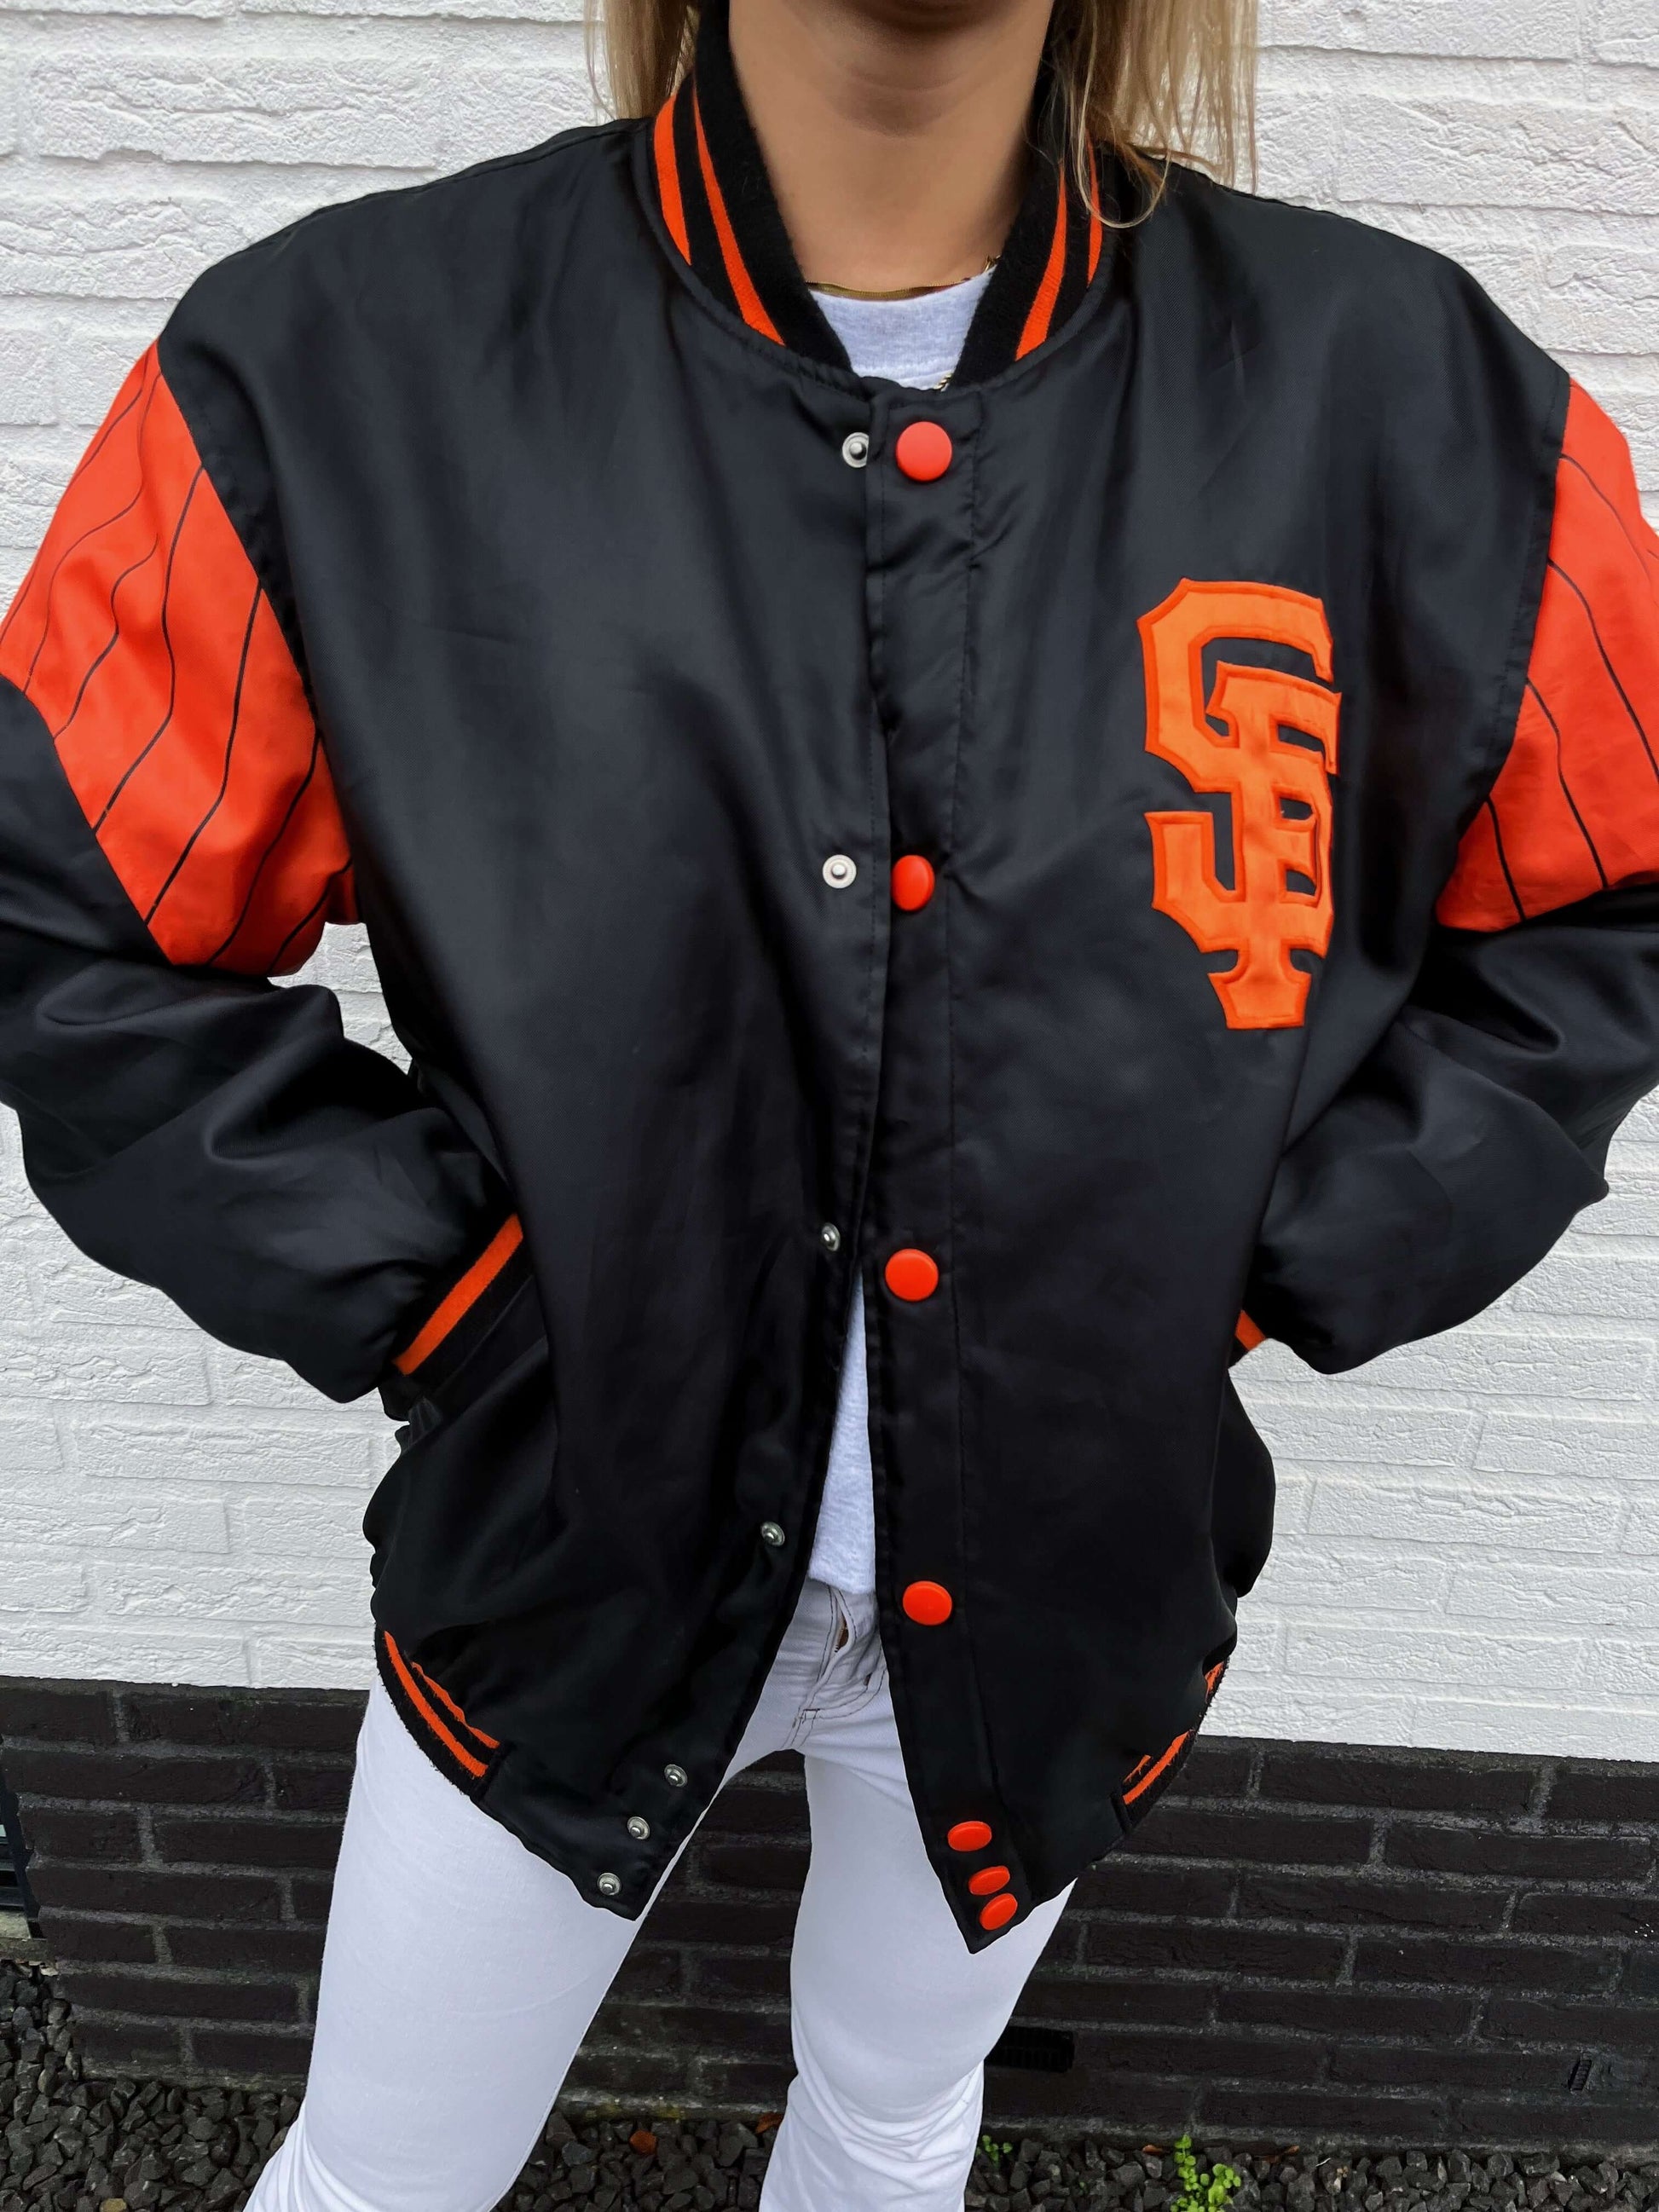 80s San Francisco Giants Bomber Black Satin Jacket